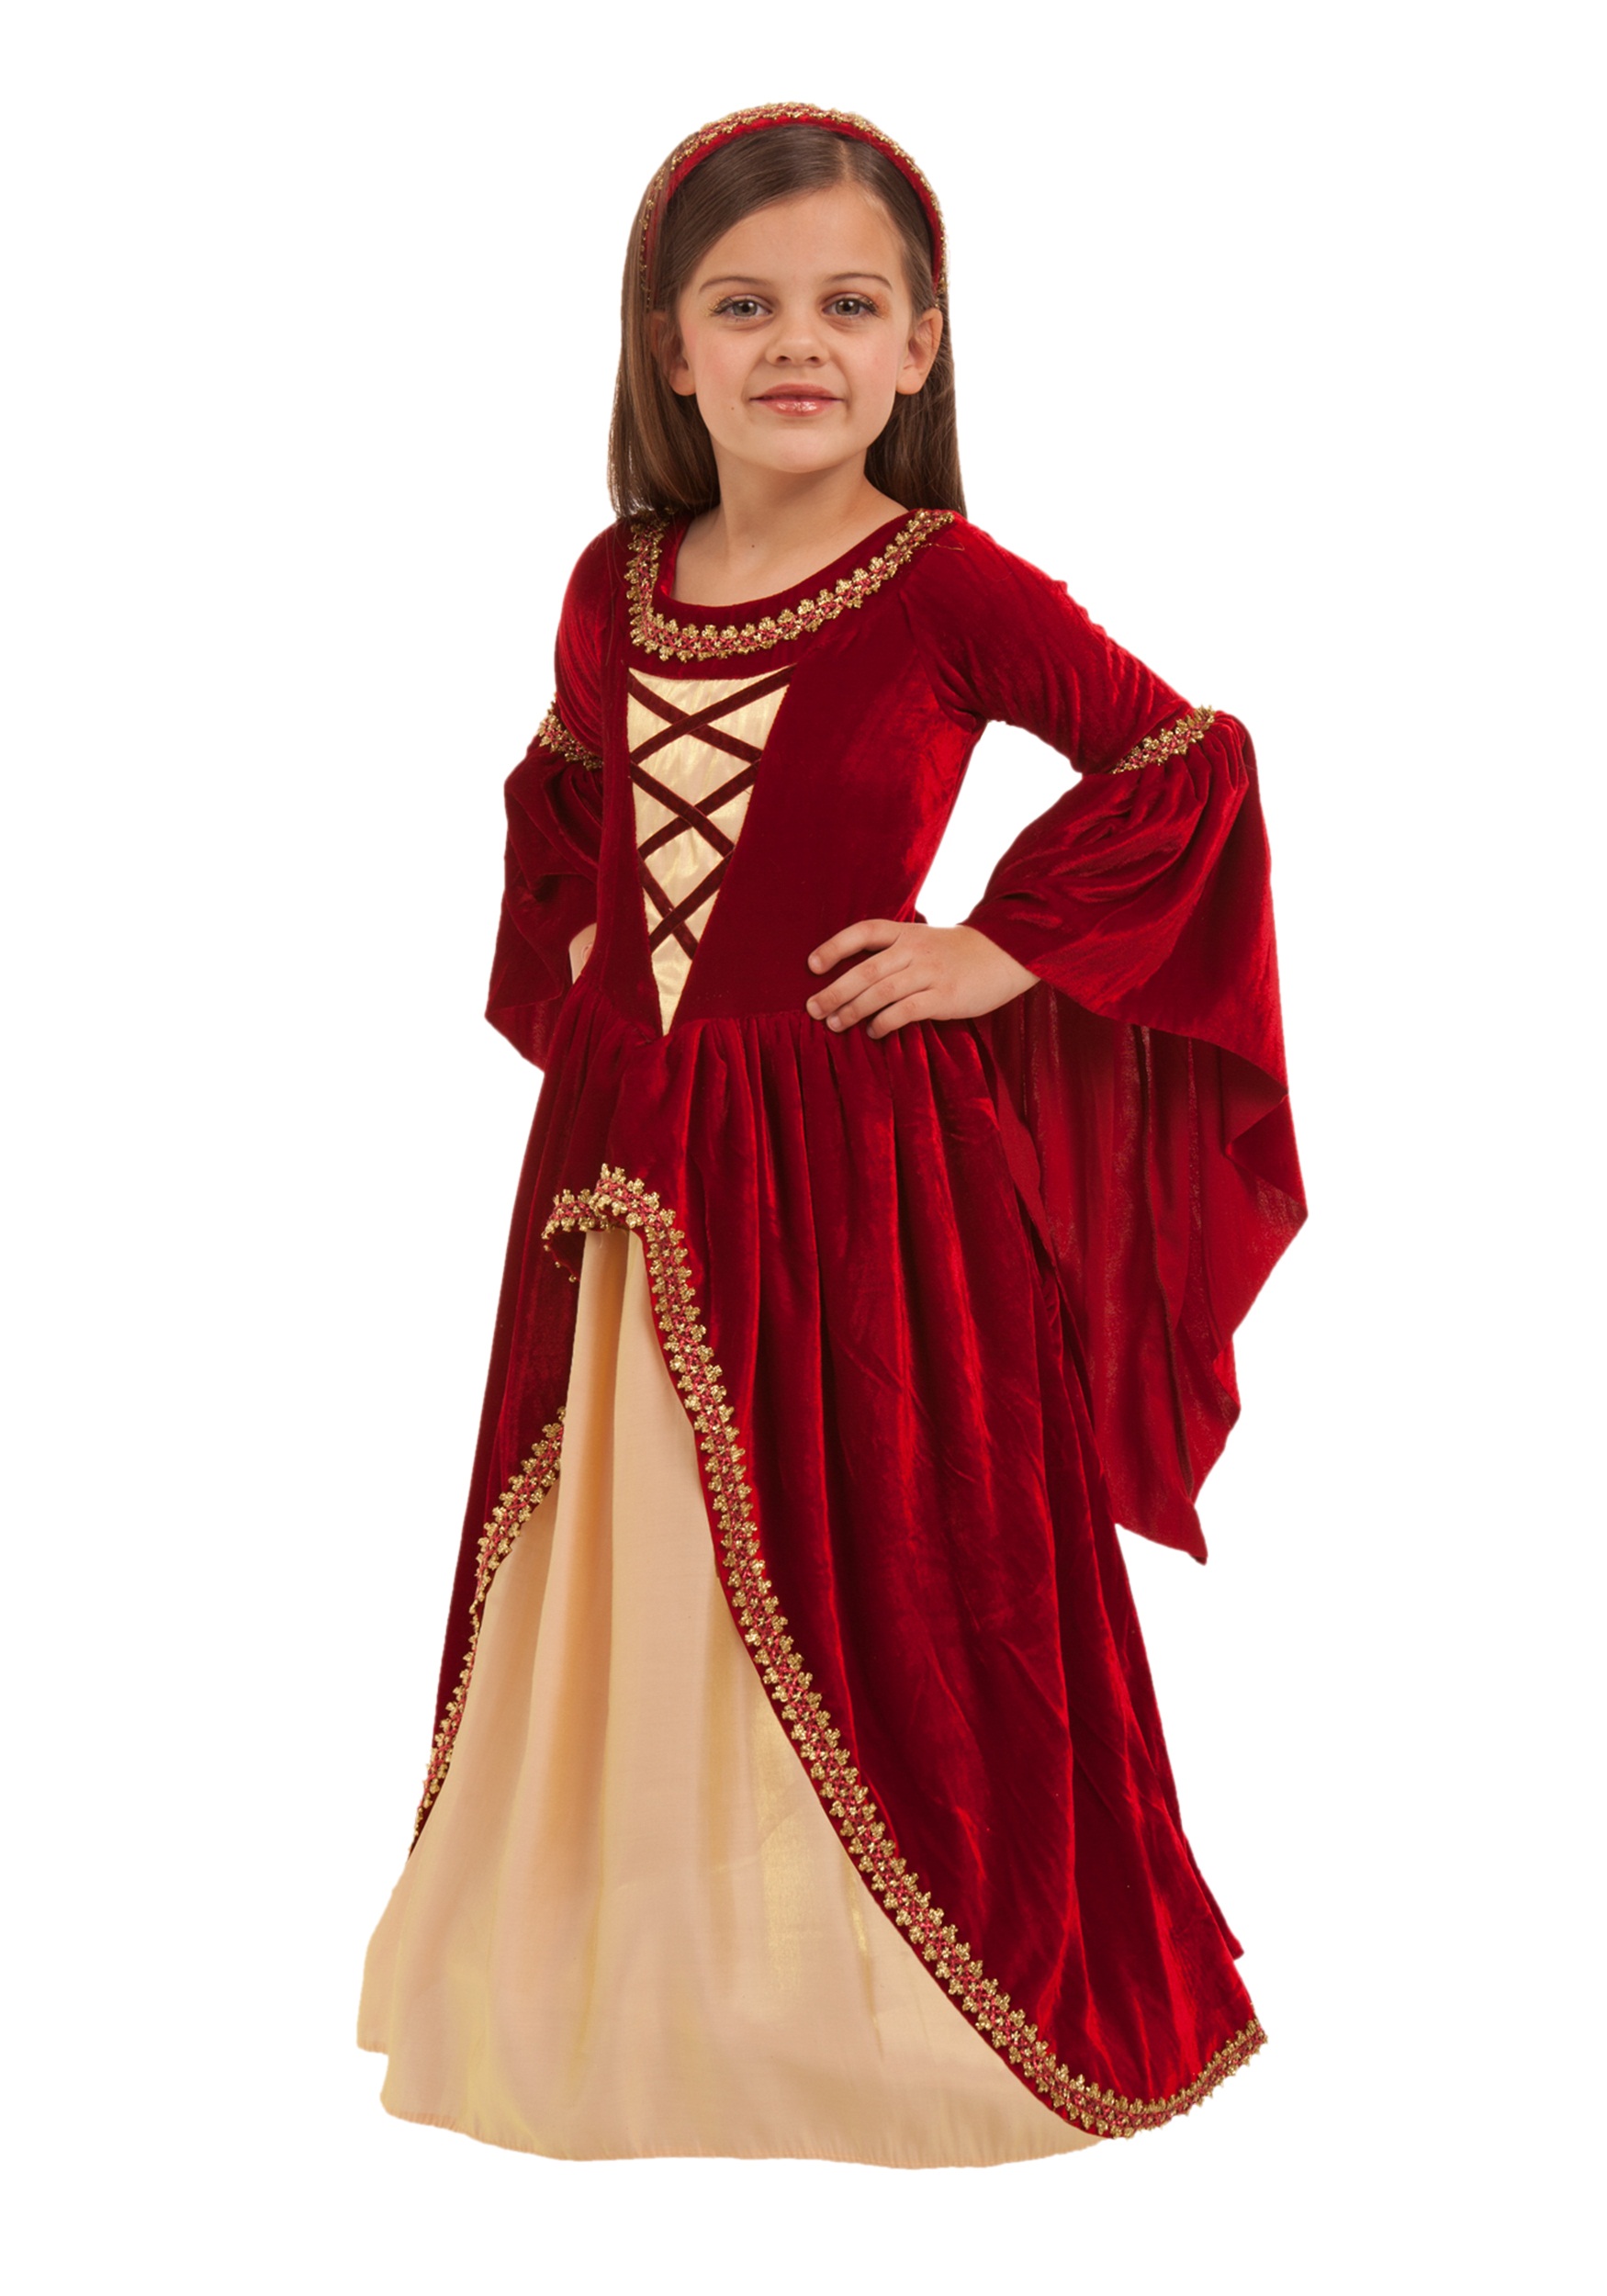 Alessandra the Crimson Princess Costume for Girls